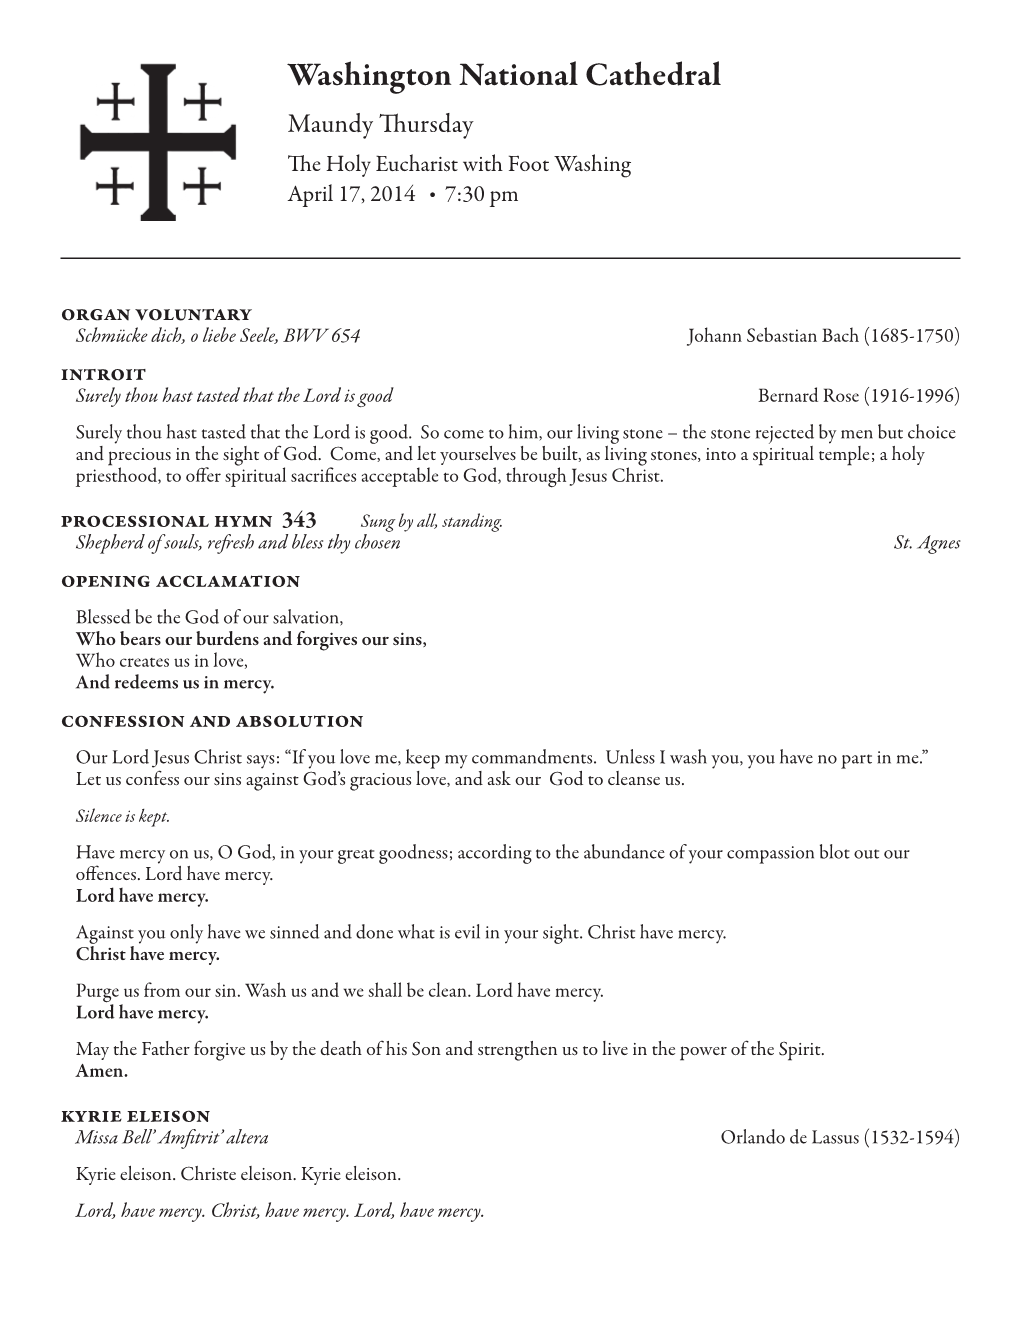 Worship Service Leaflet (Bulletin) for Holy Eucharist, Maundy Thursday, April 17, 2014